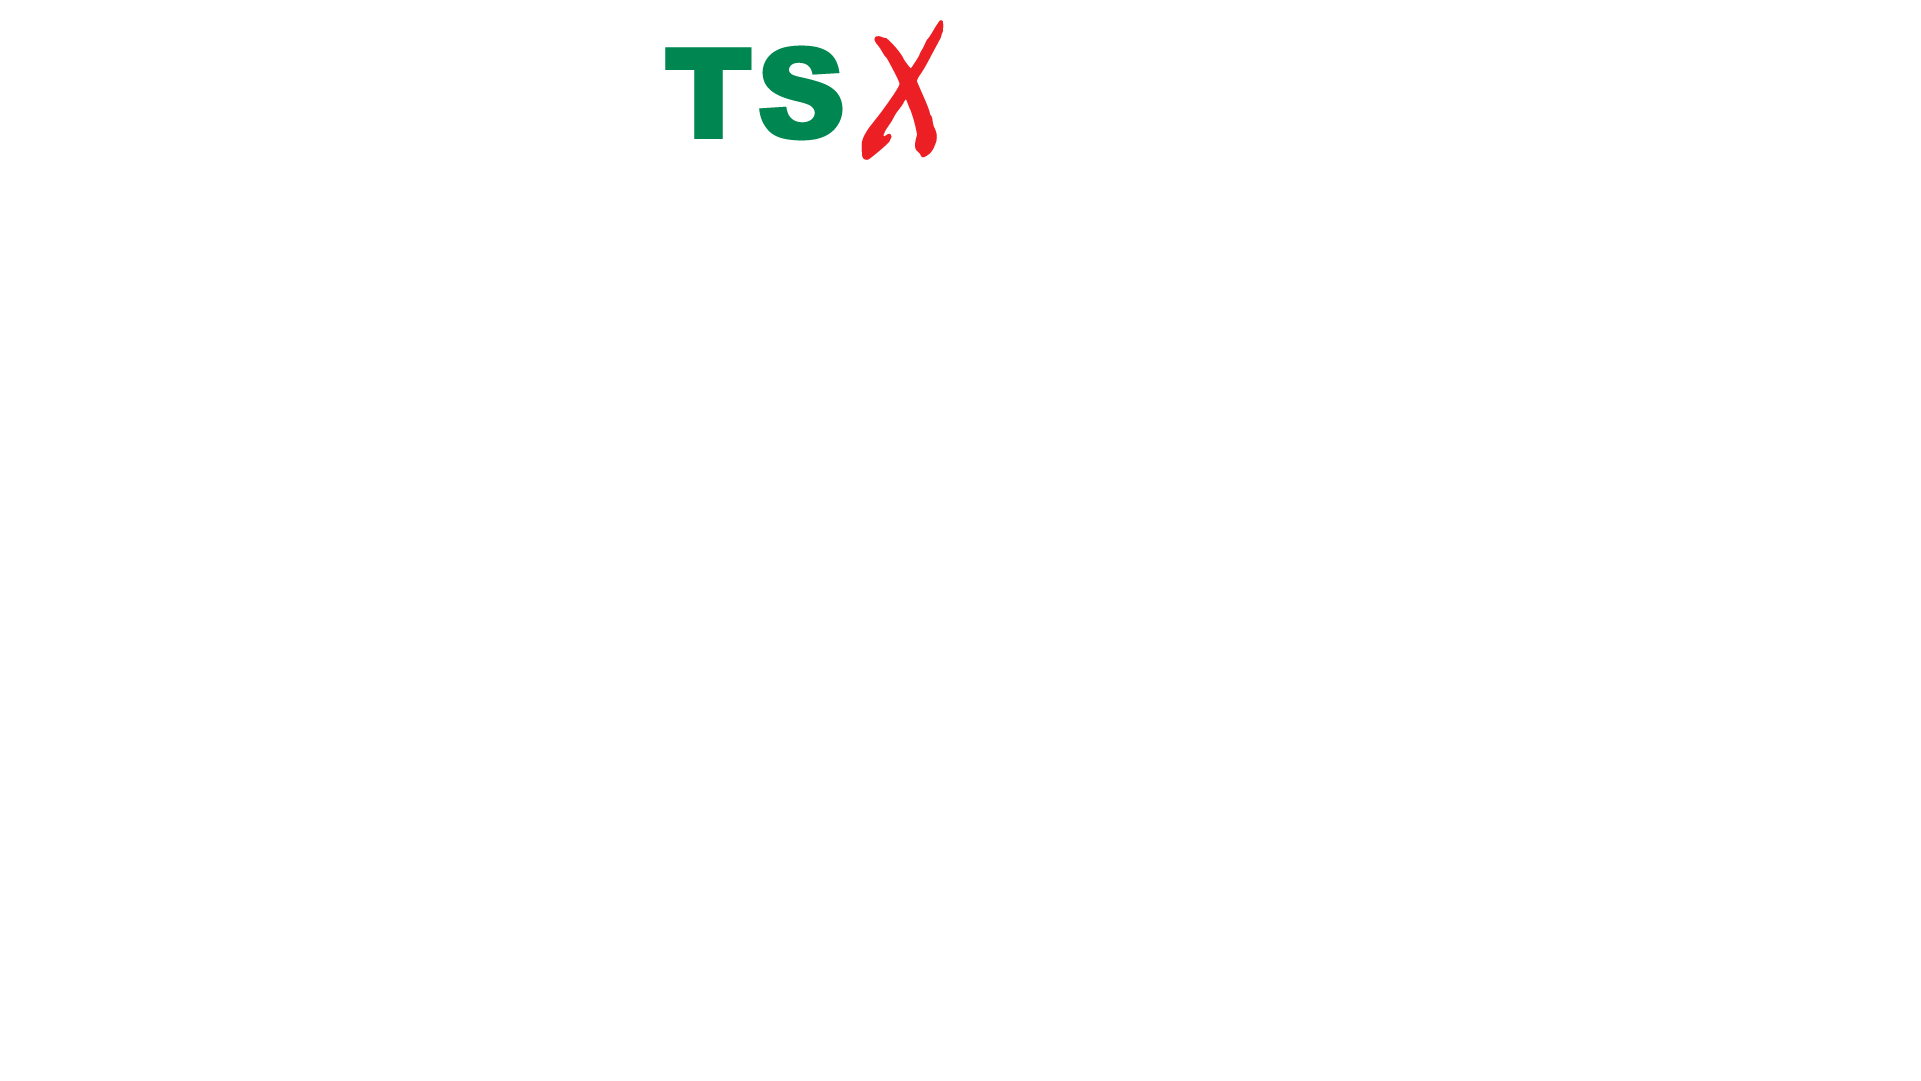 InteliJet TSX raue Umgebungen Thermoinkjetdrucker